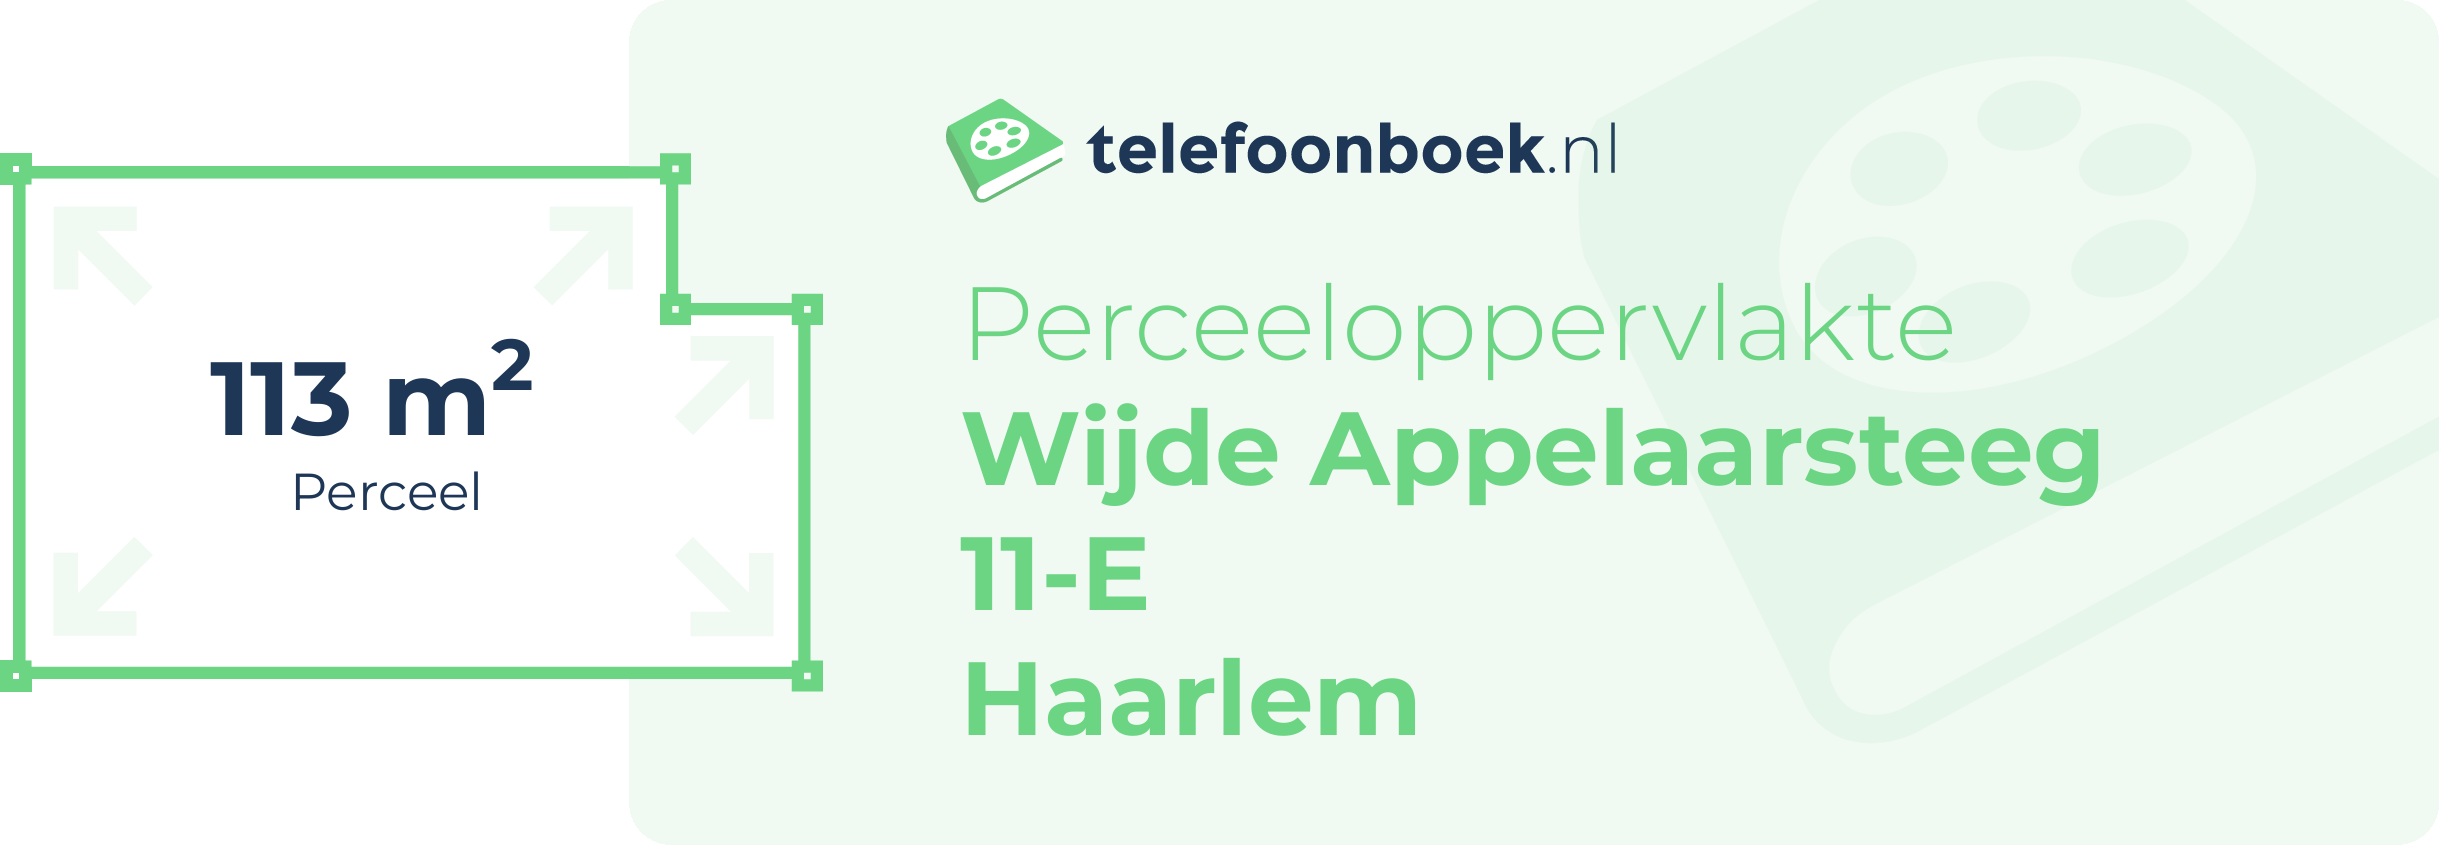 Perceeloppervlakte Wijde Appelaarsteeg 11-E Haarlem